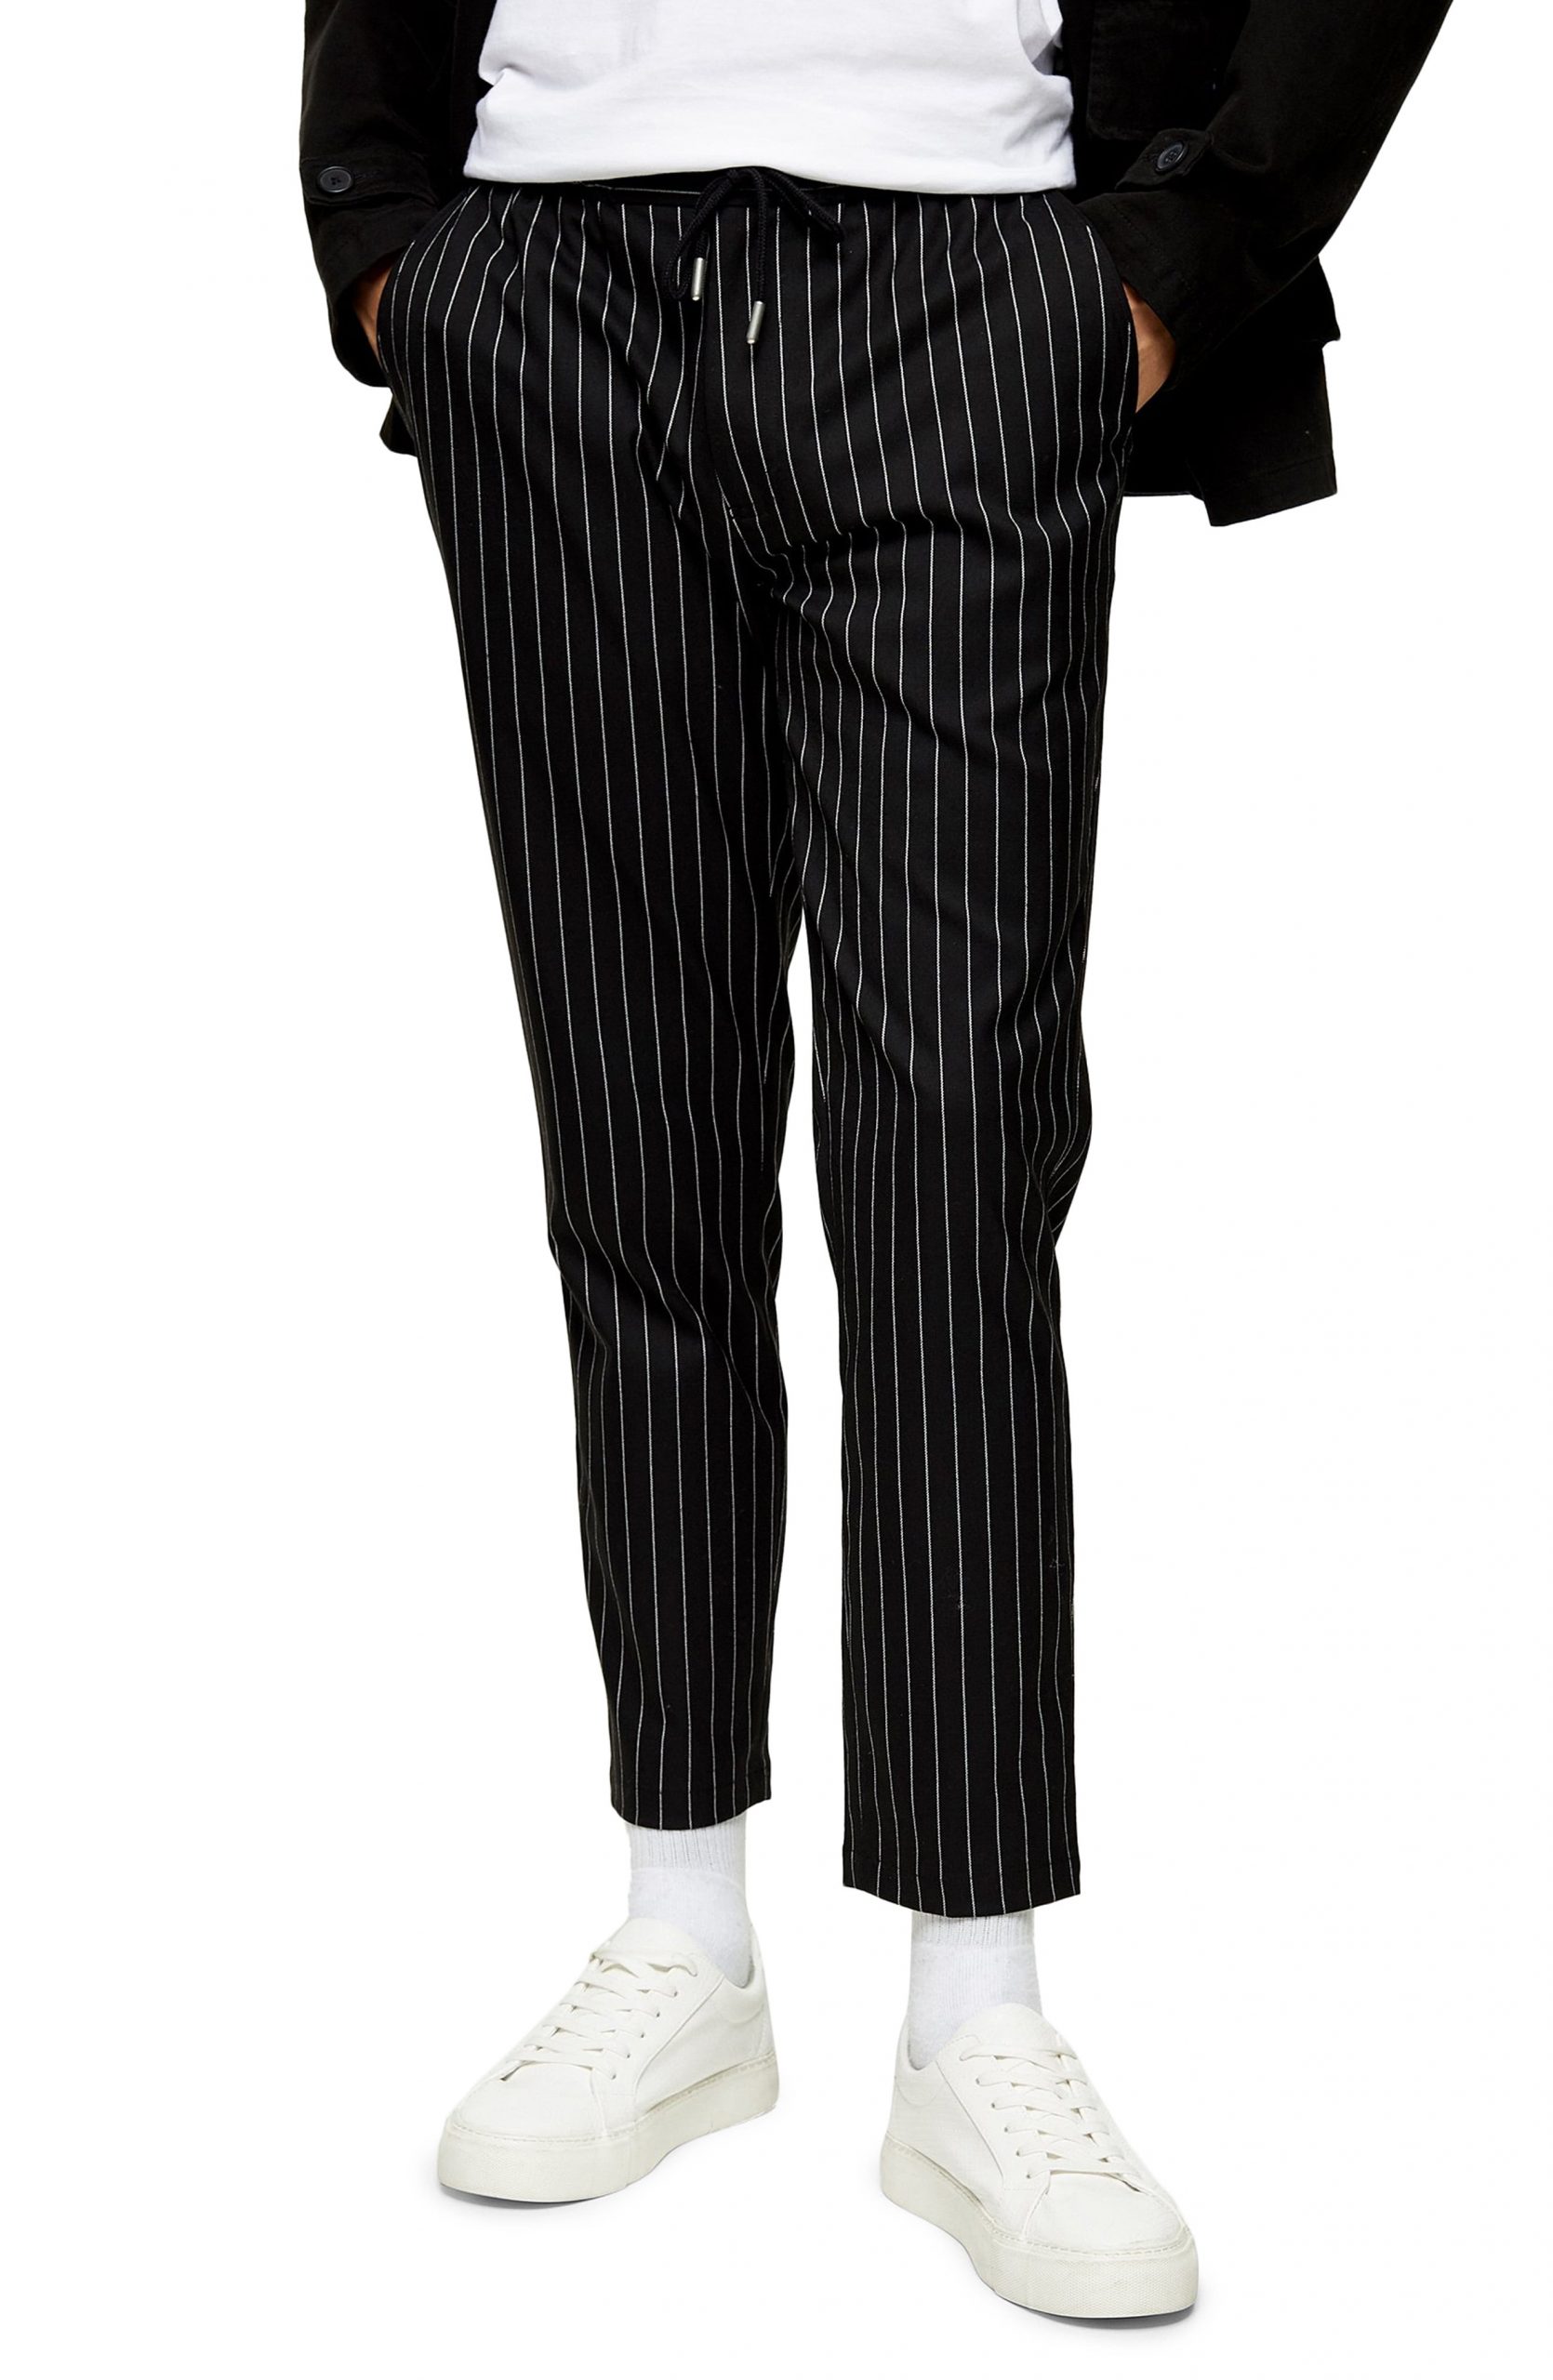 Men’s Topman Whyatt Stripe Trousers, Size 34 x 34 - Black | The Fashionisto